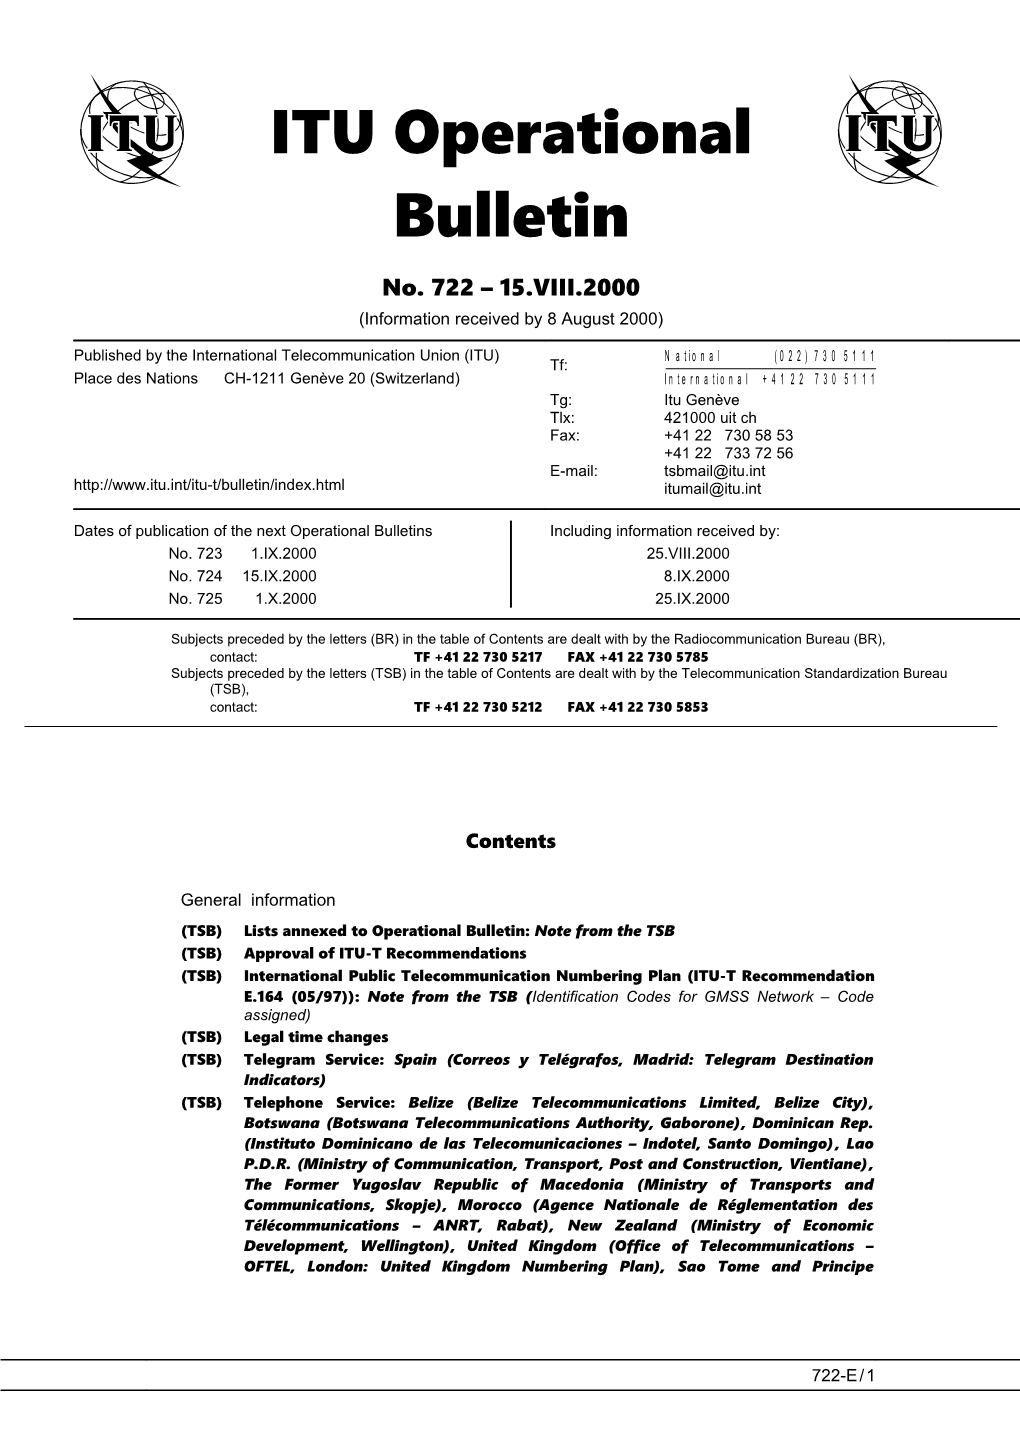 ITU Operational Bulletin No. 722 15.VIII.2000